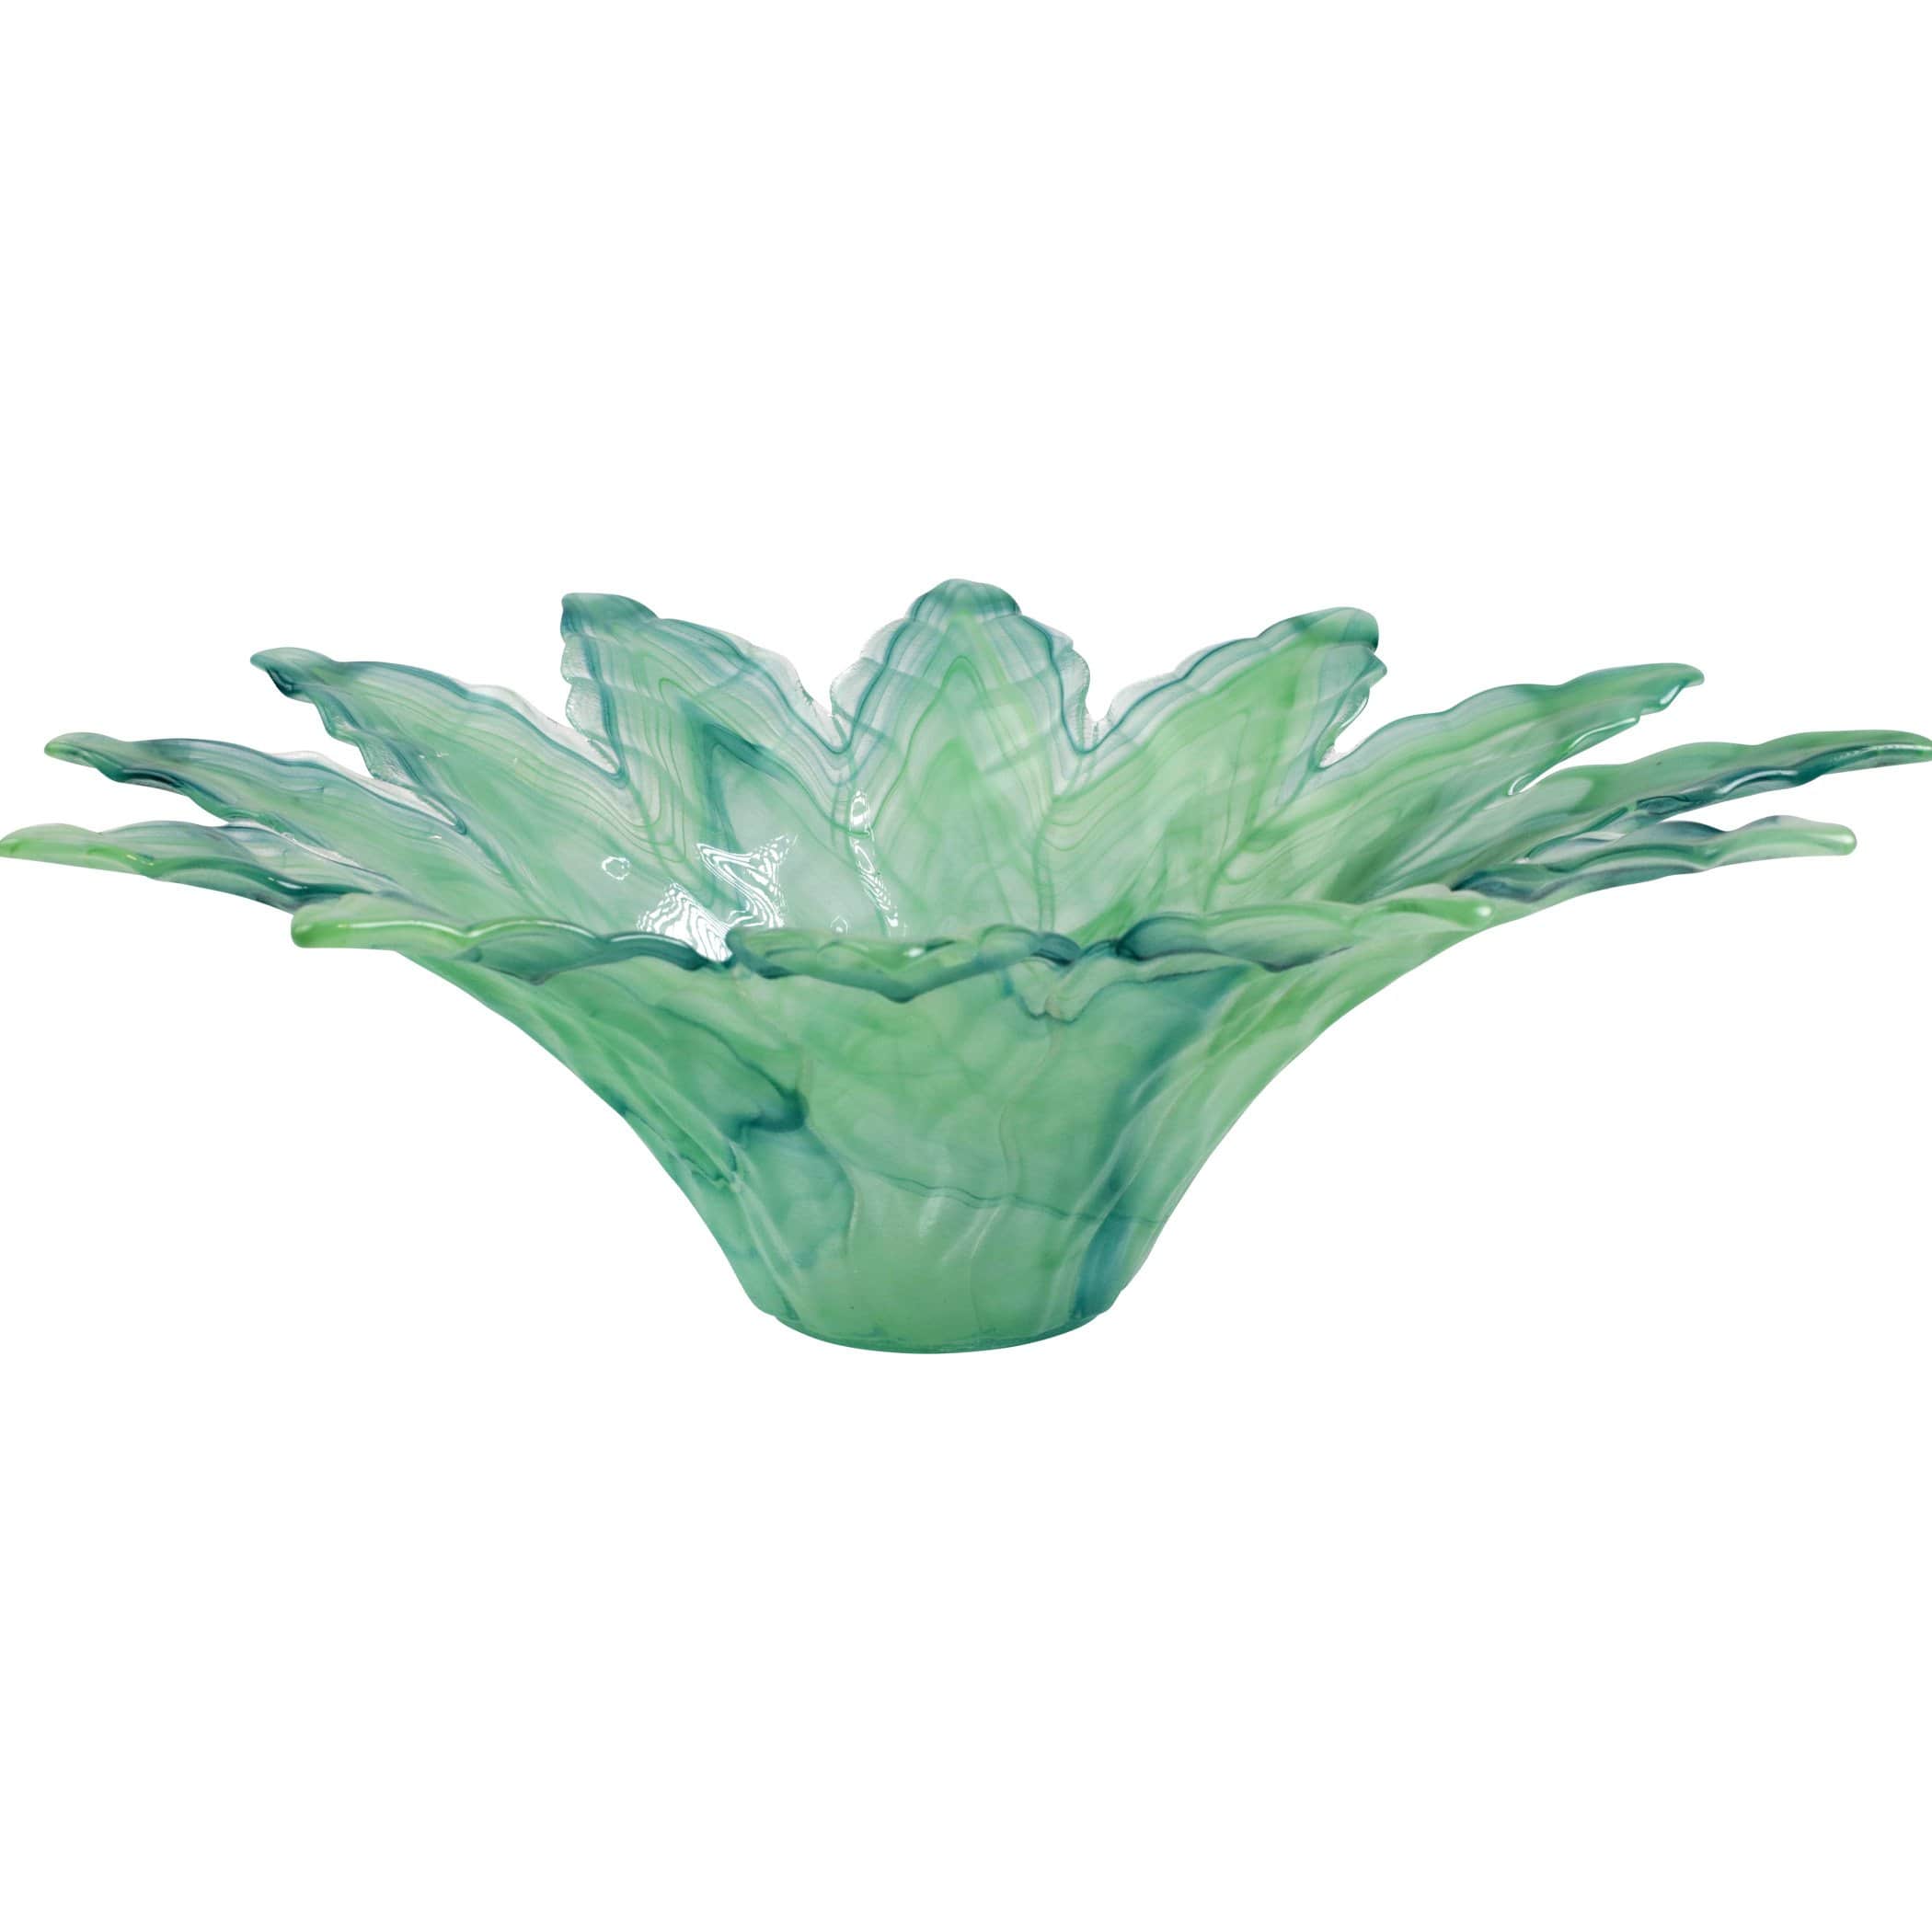 Vietri Onda Glass Leaf Large Centerpiece - Green